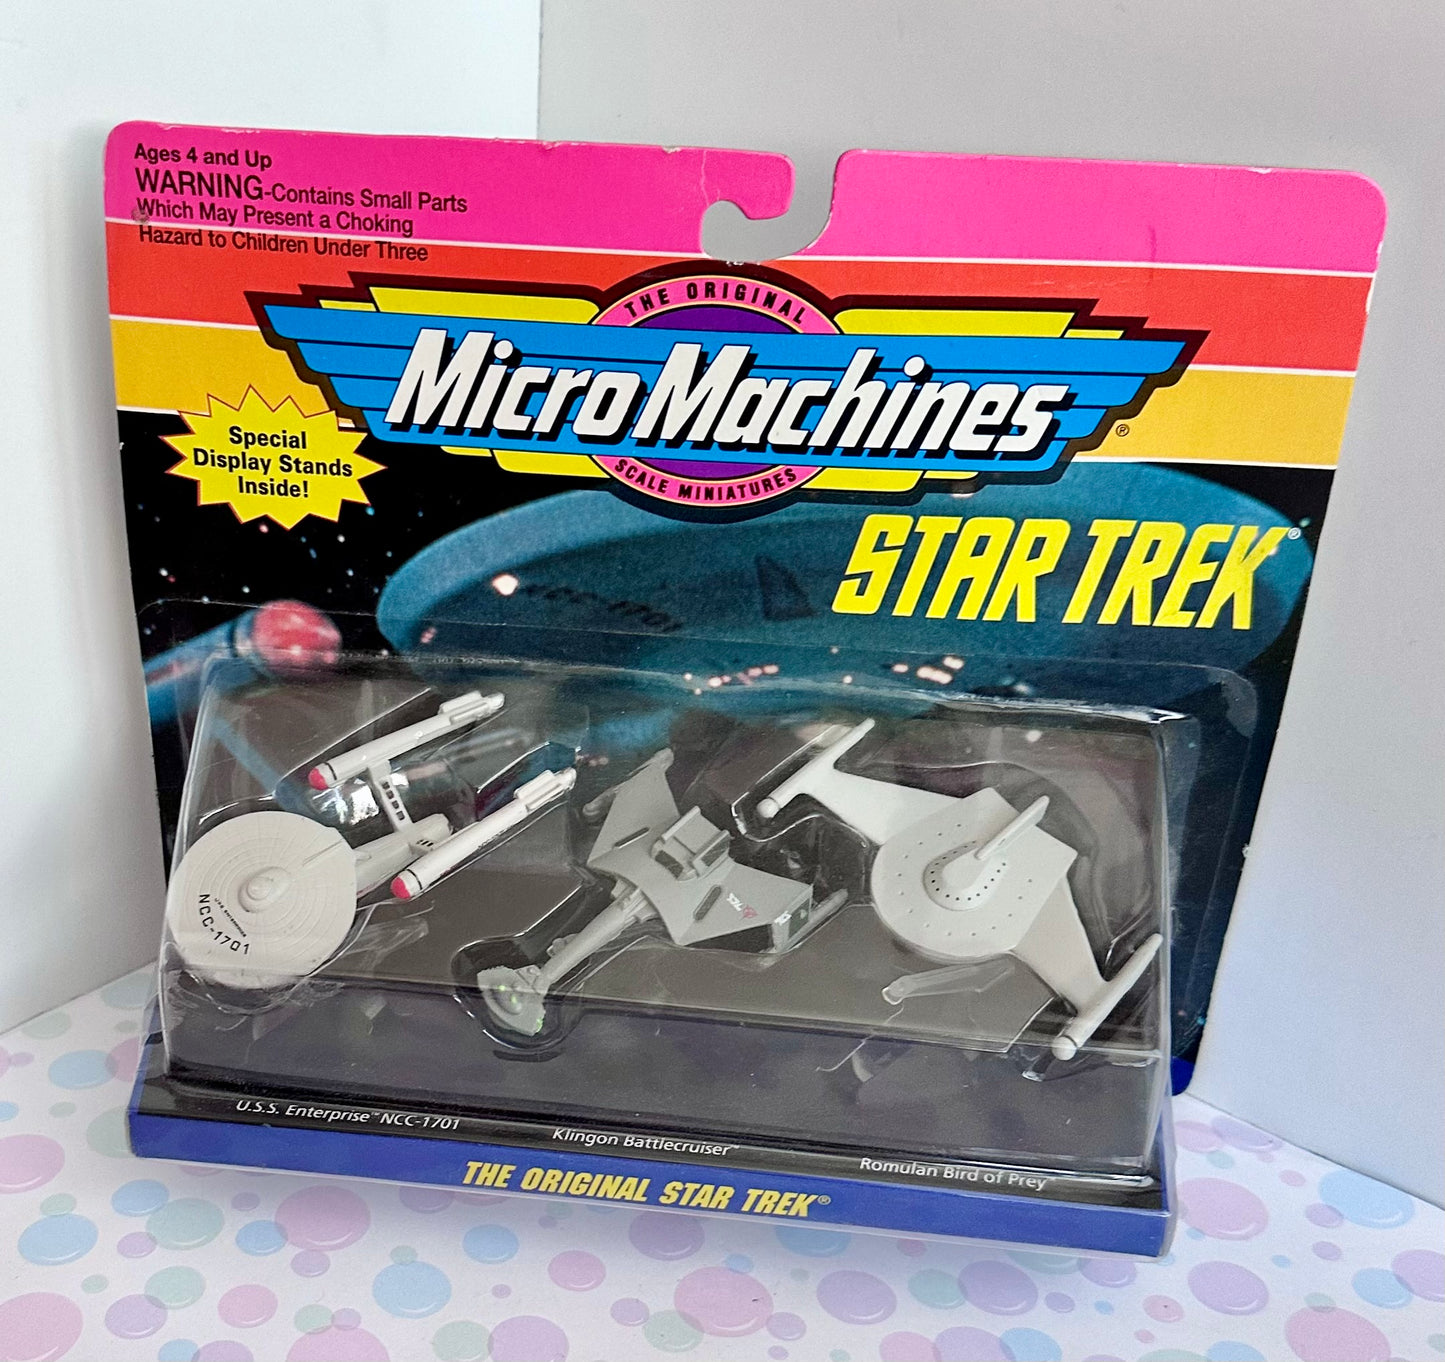 1993 Micro Machines The Original Star Trek